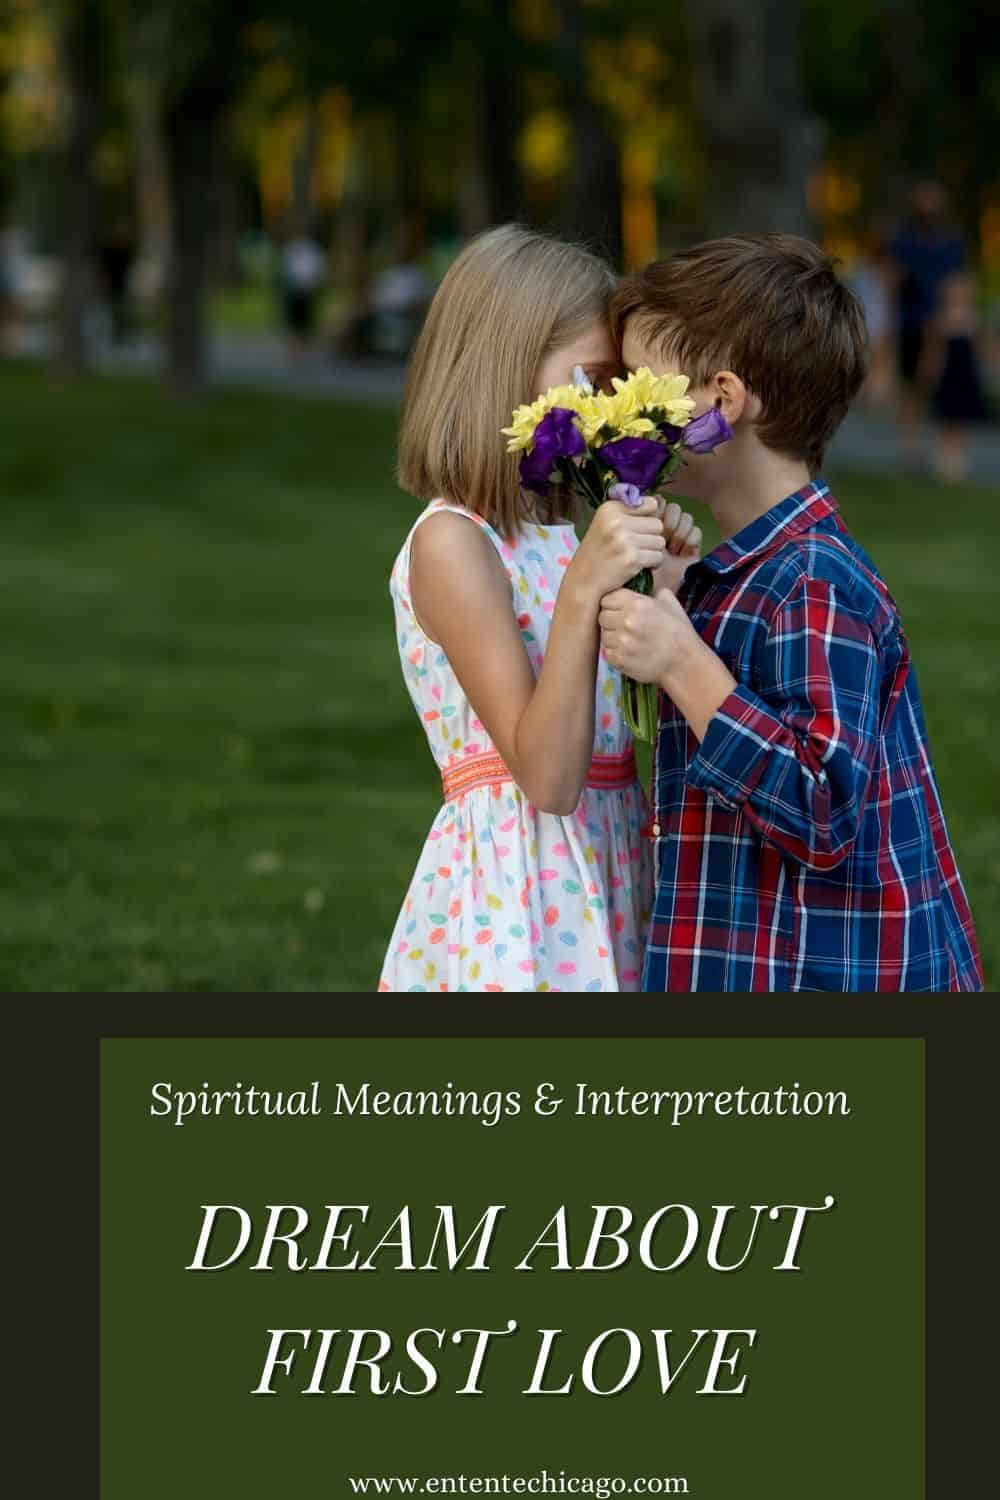 Dream About First Love (Spiritual Meanings & Interpretation)